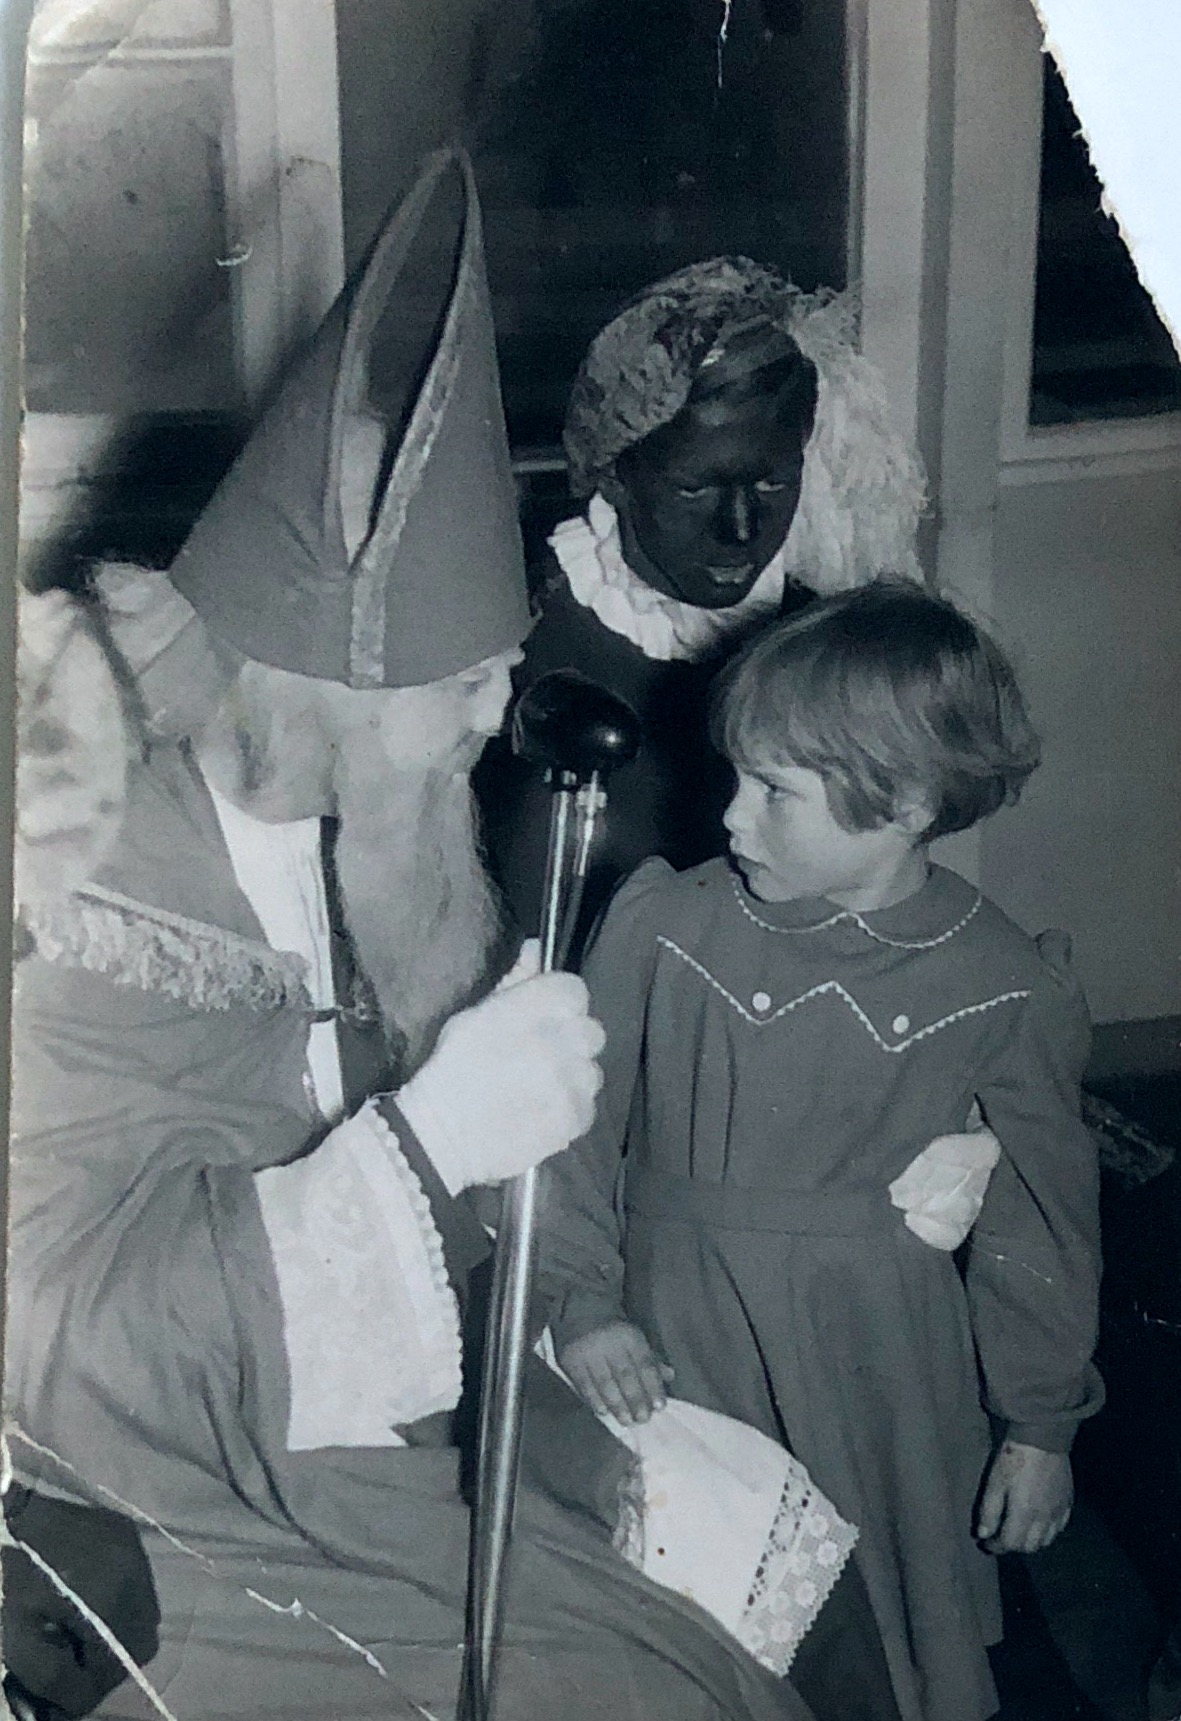 Dutch Sinterklaas (Santa Claus) celebration 1960s